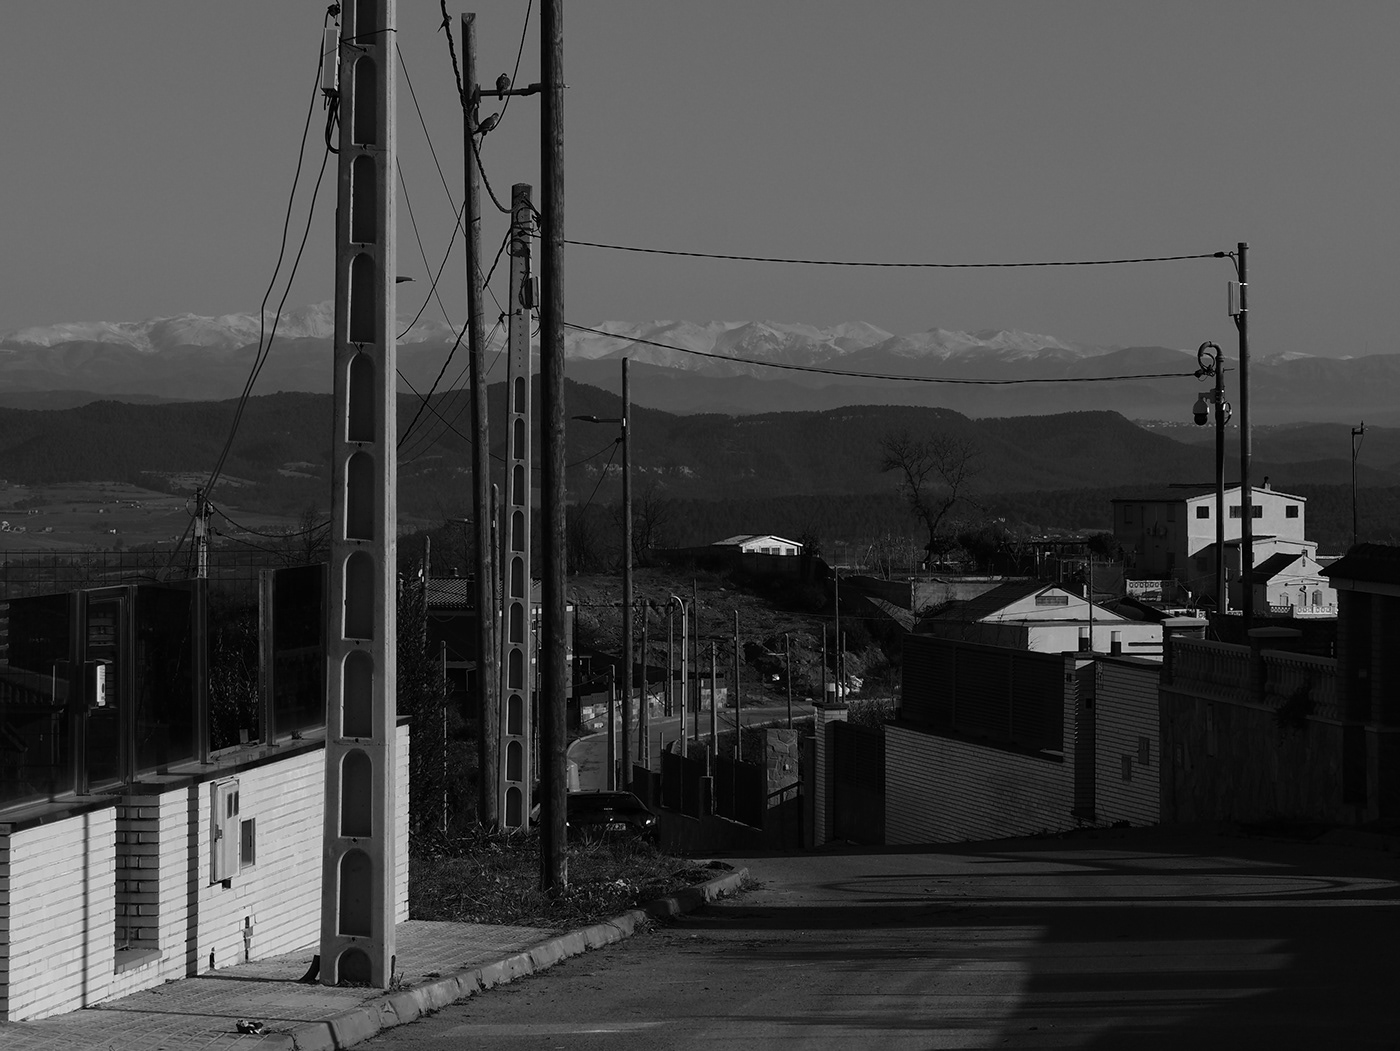 monochrome black and white architecture buildings photografy Residential area urbanització street photografy